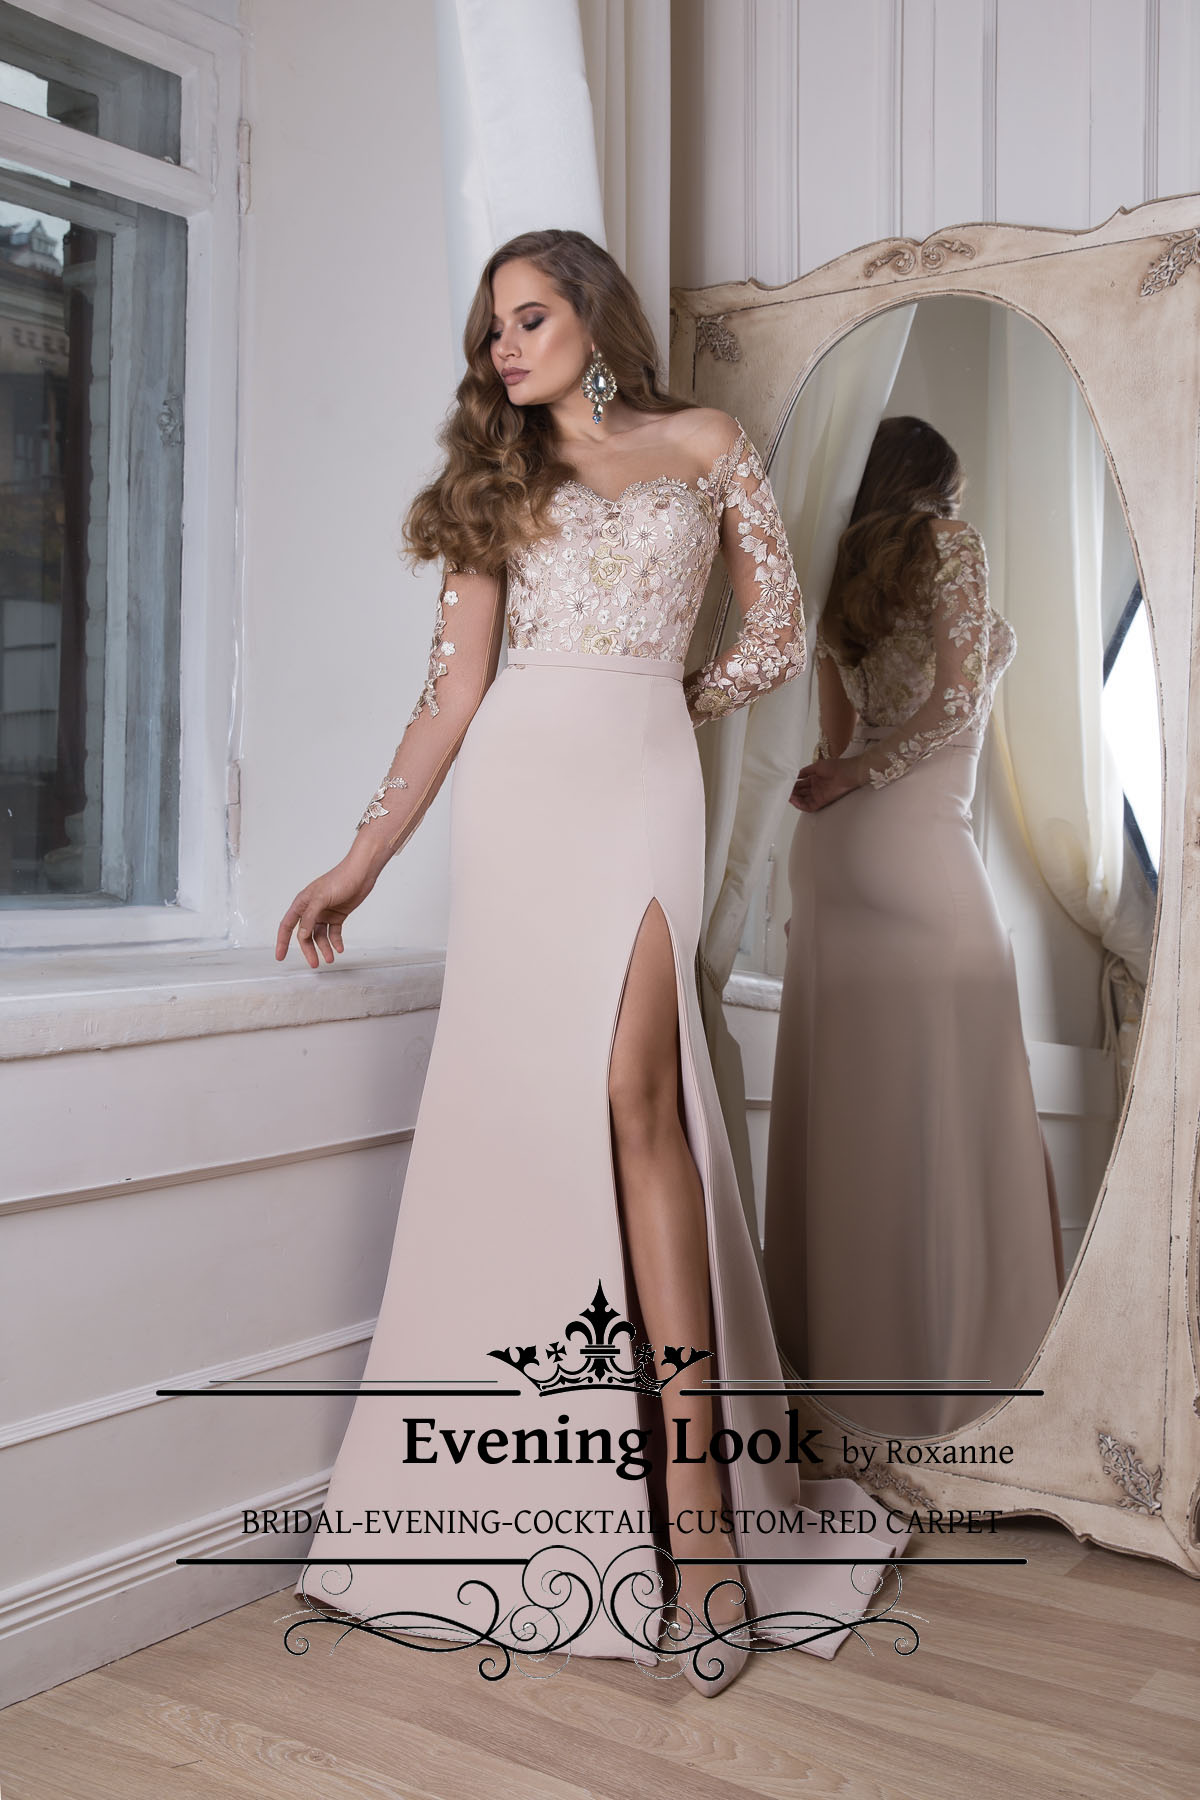 Retaliation Brighten pageant rochie de seara crem ivory grace rochii elegante 2017 2018 - Rochii Elegante  de Lux